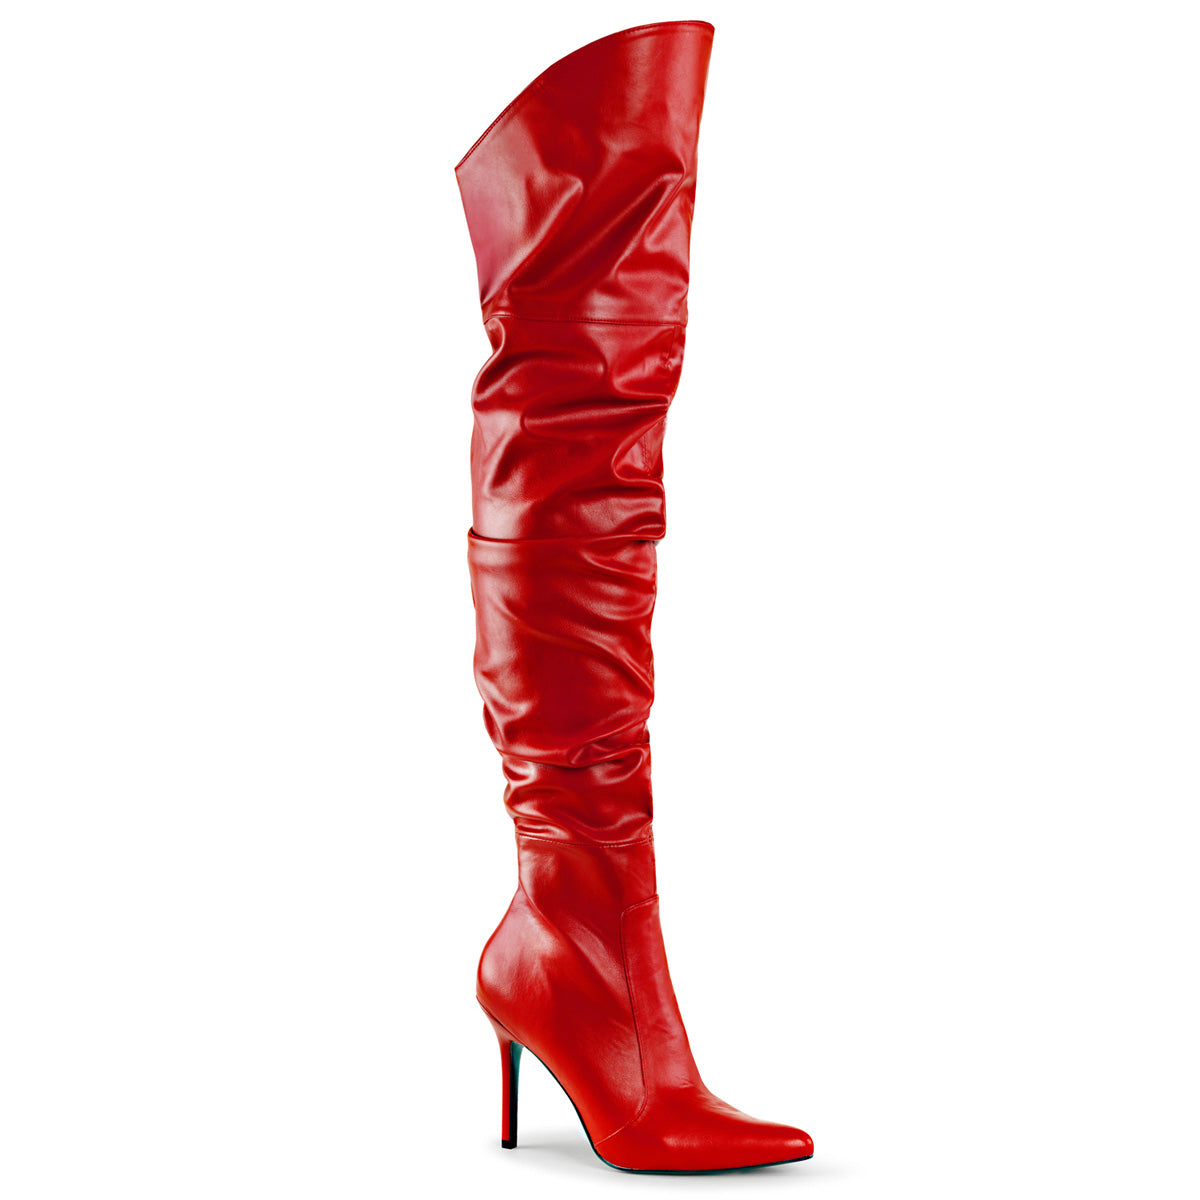 CLASSIQUE-3011 - Red Faux Leather